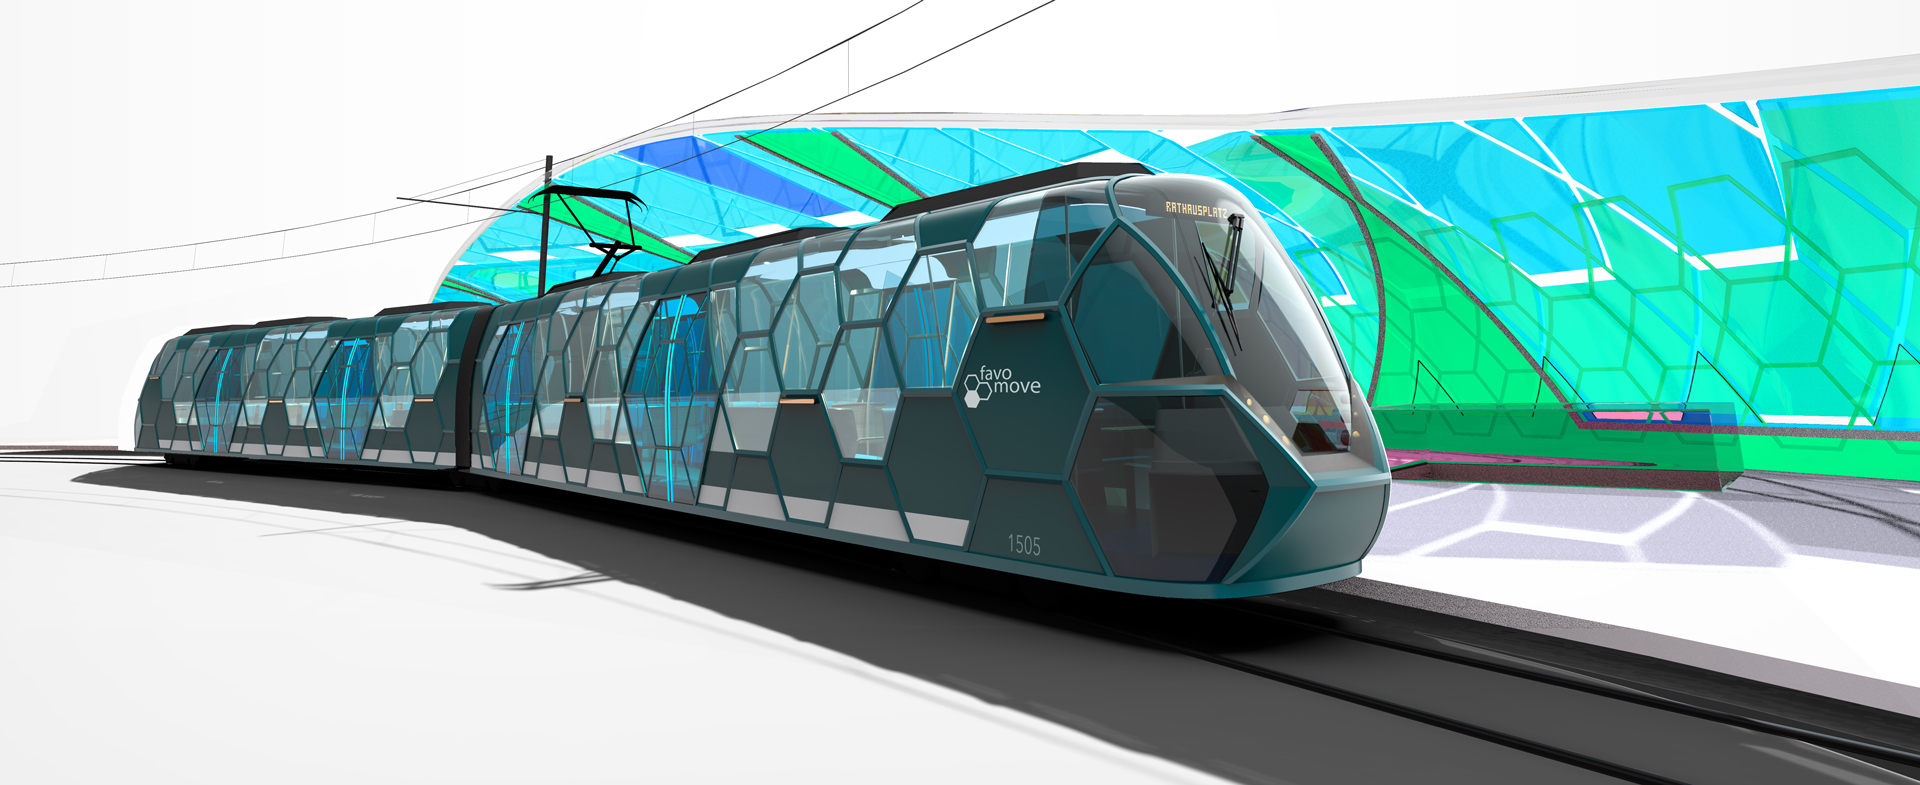 Favomove Exterieur Design mit Haltestelle / Urban train stop design